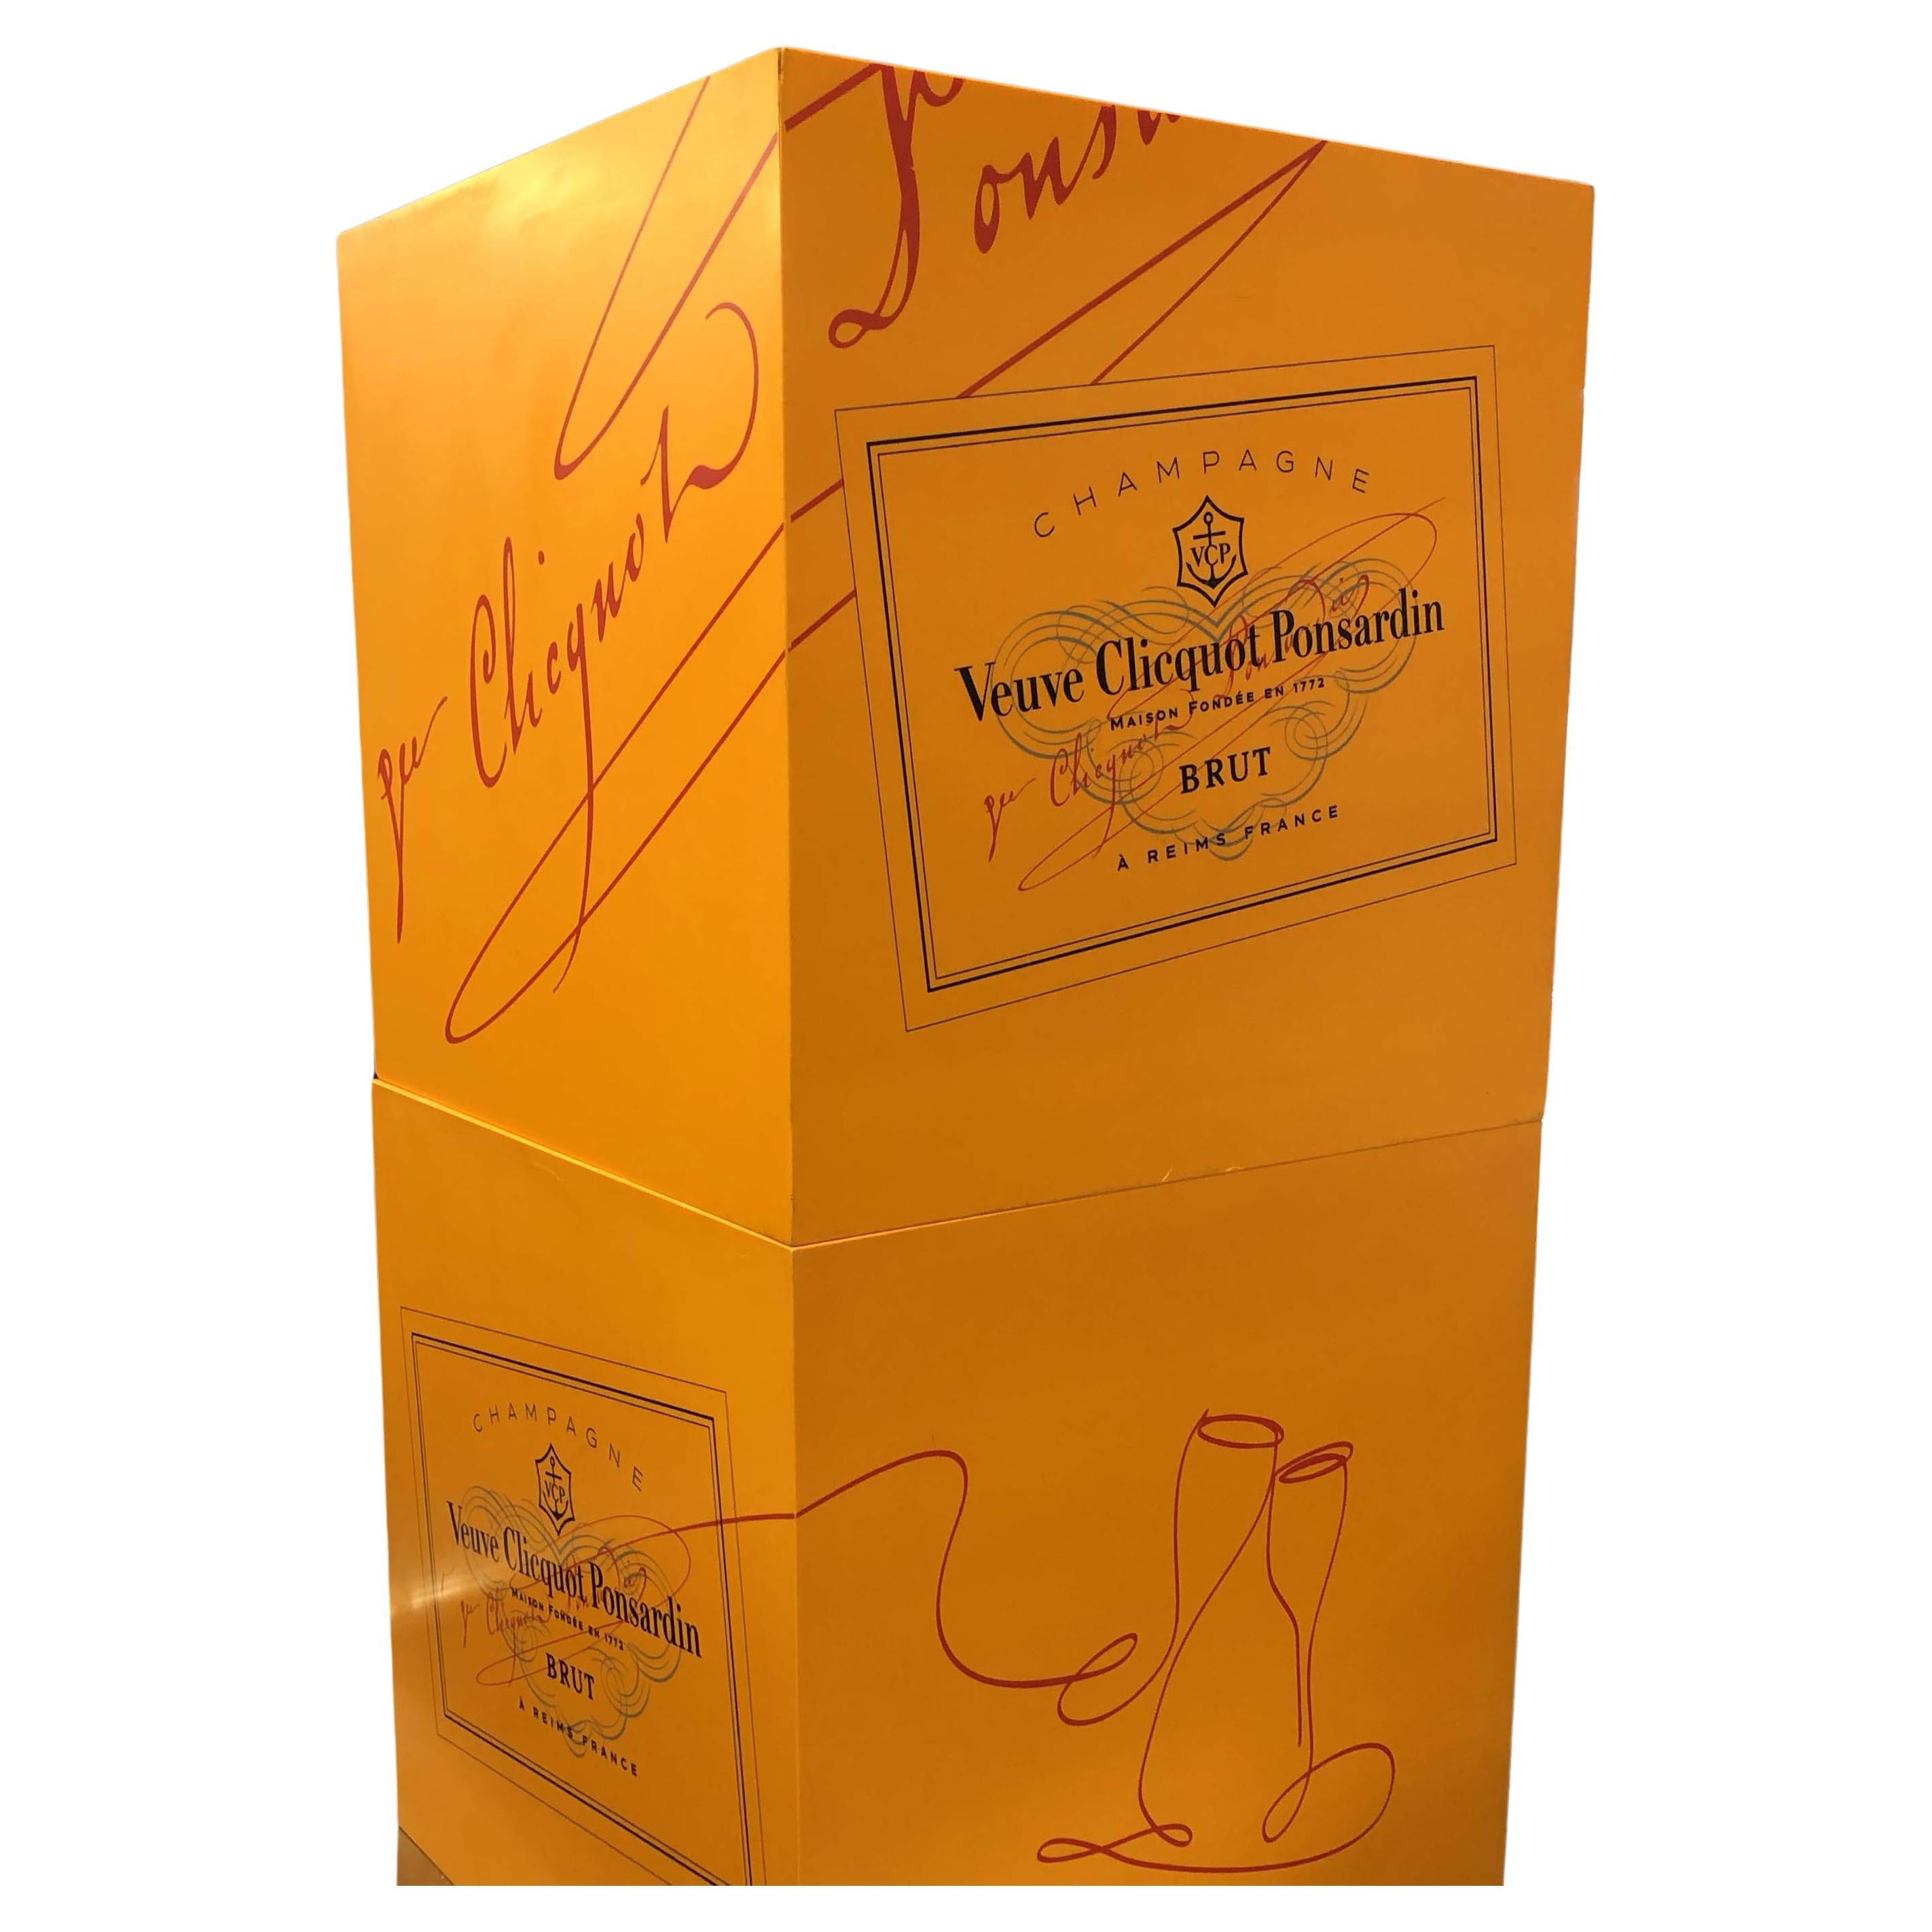 Veuve Clicquot Promotional Display Boxes, Pair